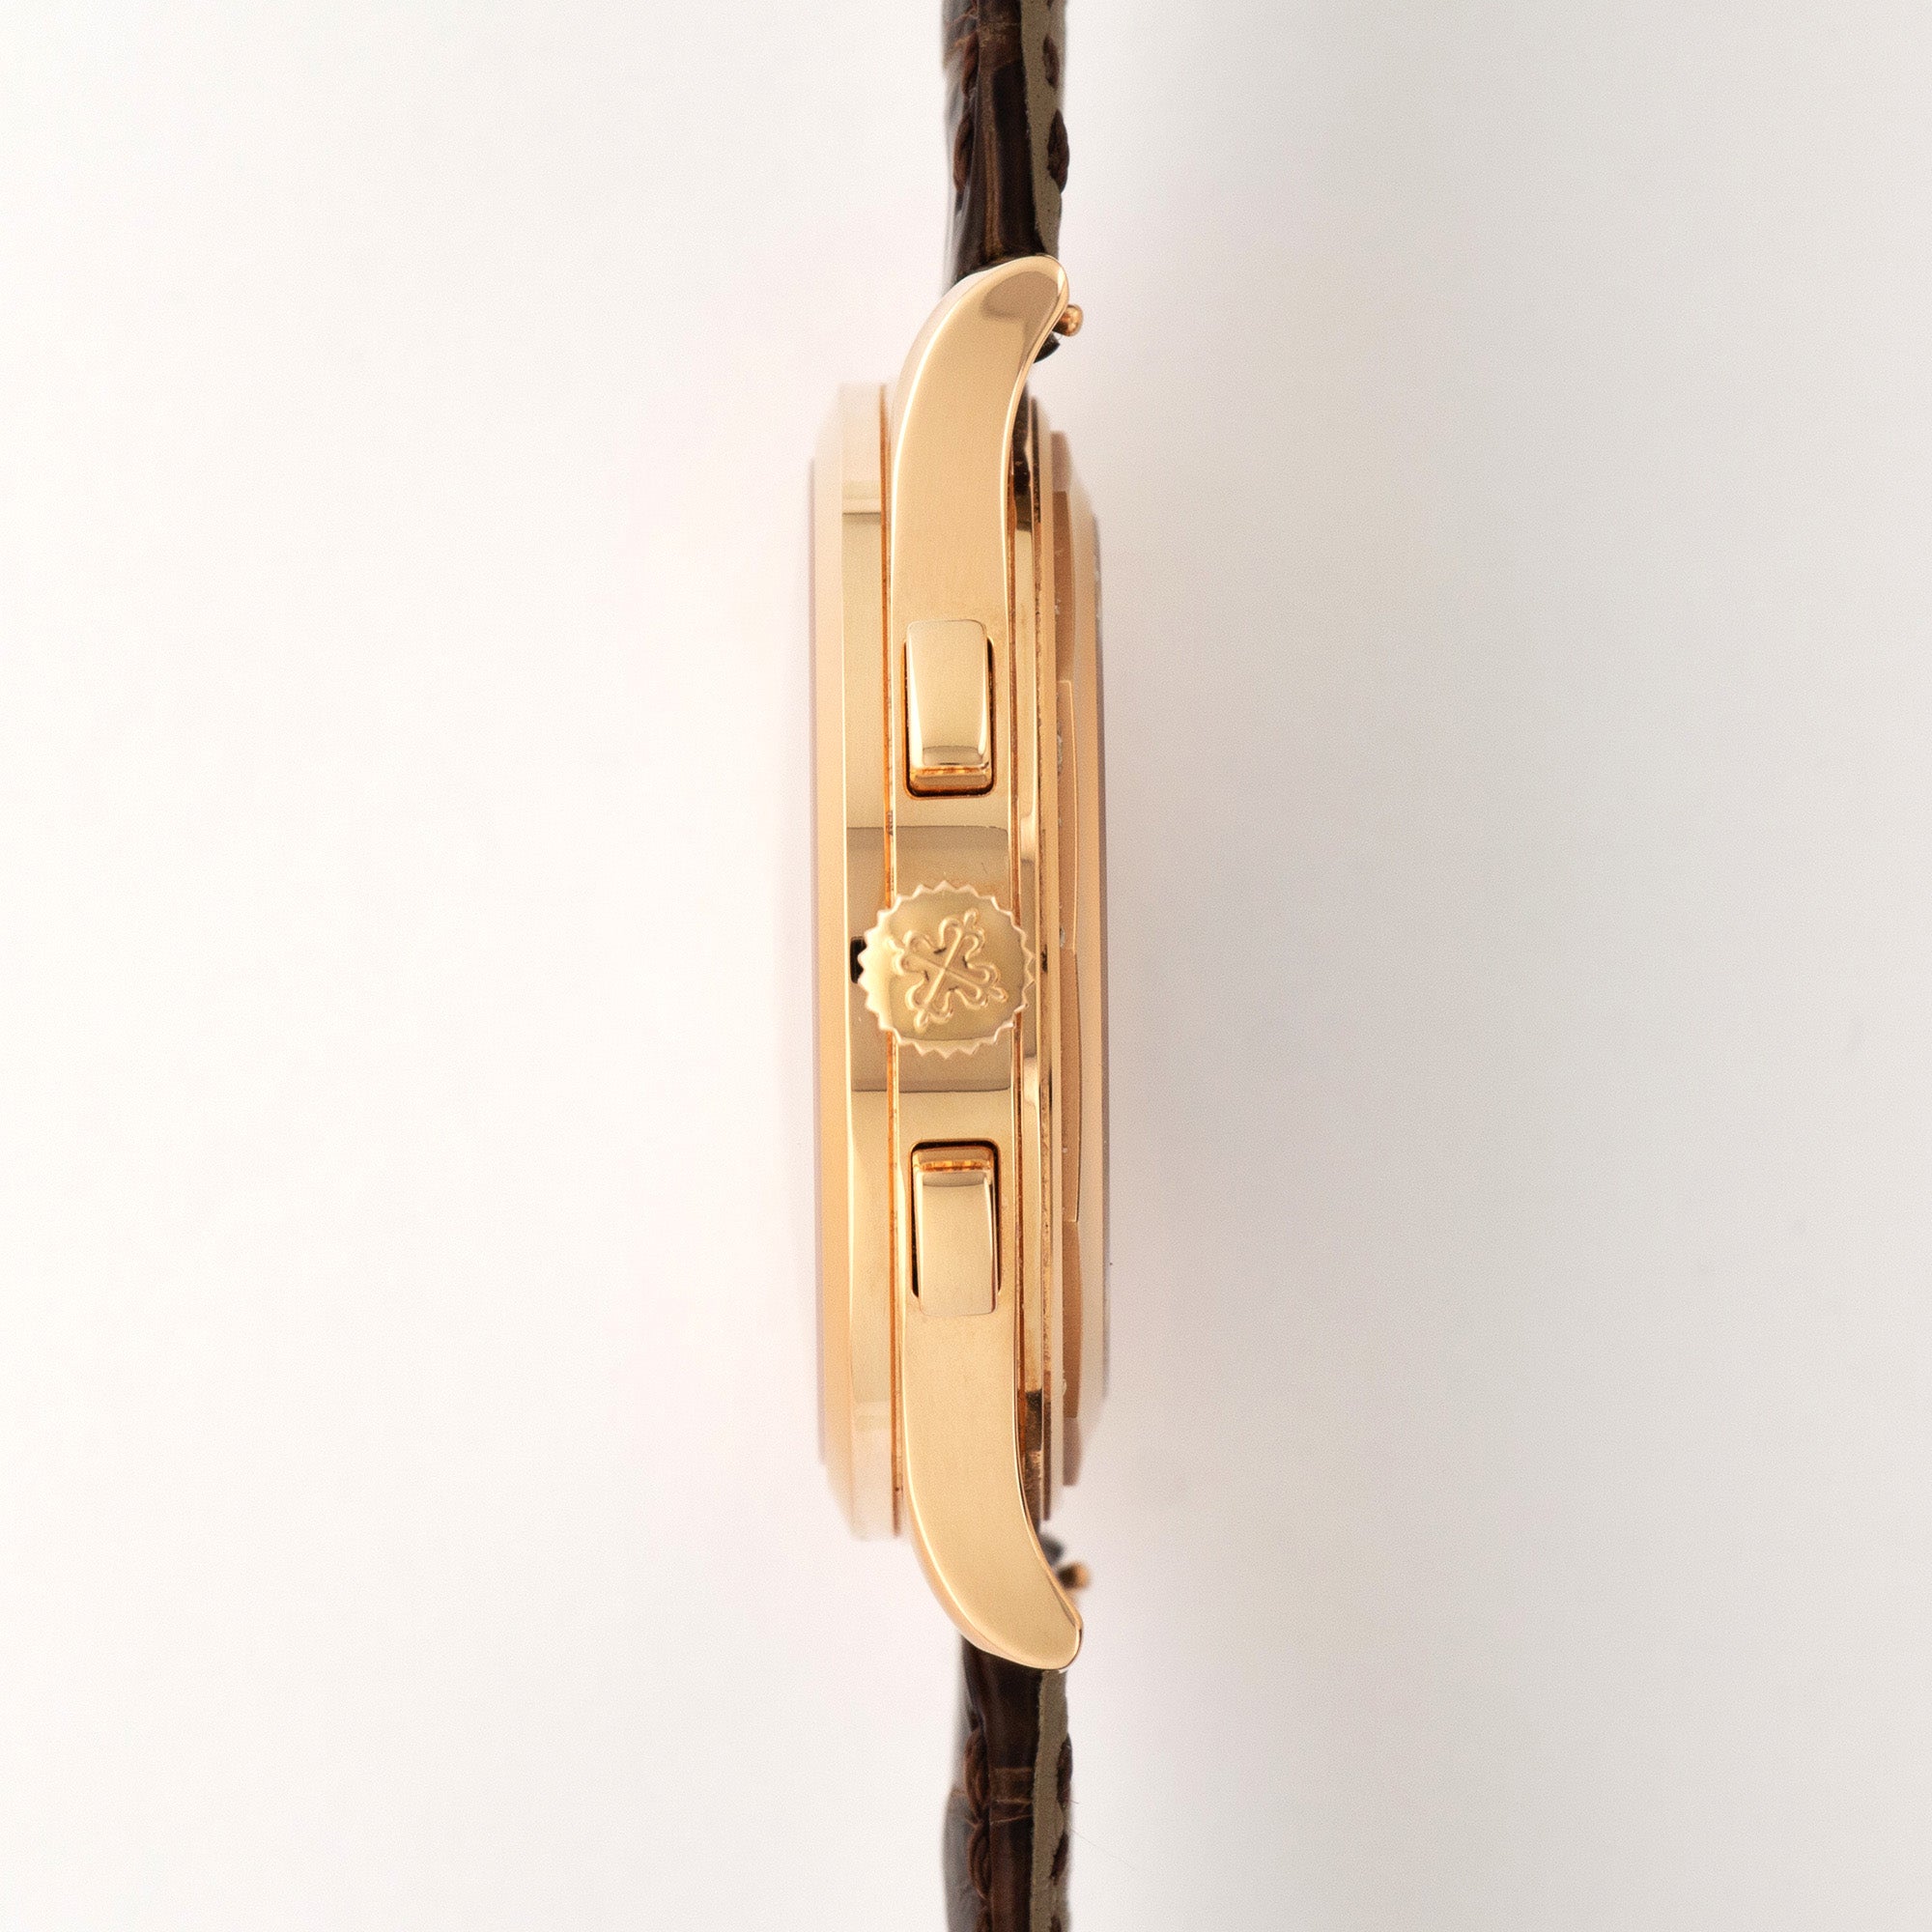 Patek Philippe - Patek Philippe Rose Gold Chronograph Ref. 5170 - The Keystone Watches